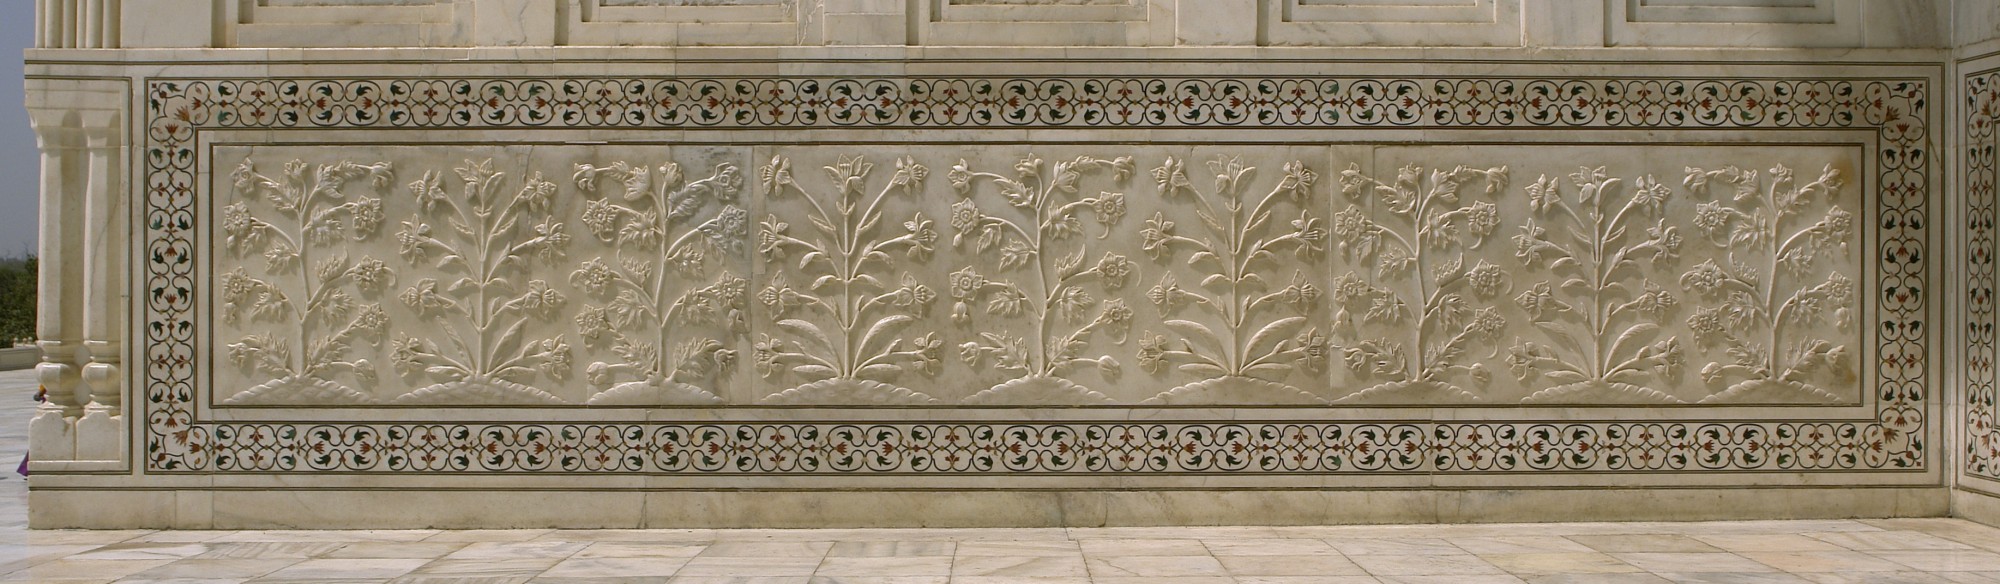 Flowers in marble, Taj Mahal, Agra, UP, India